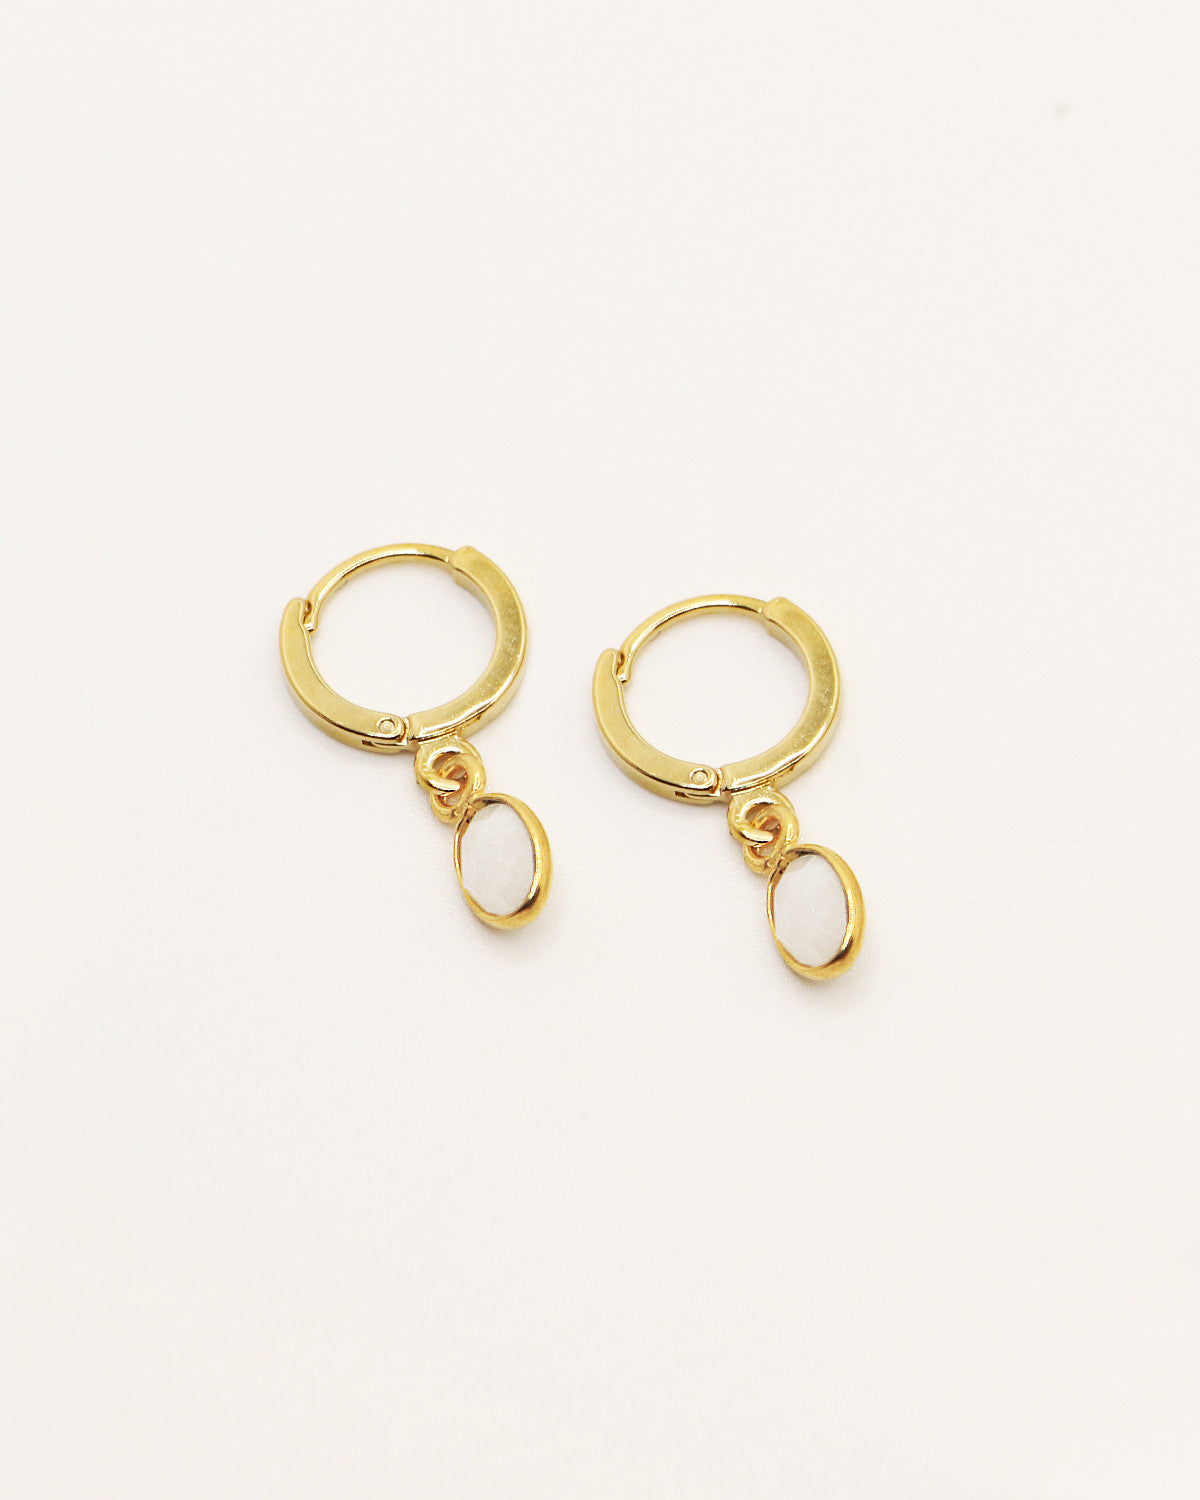 Gaia earrings